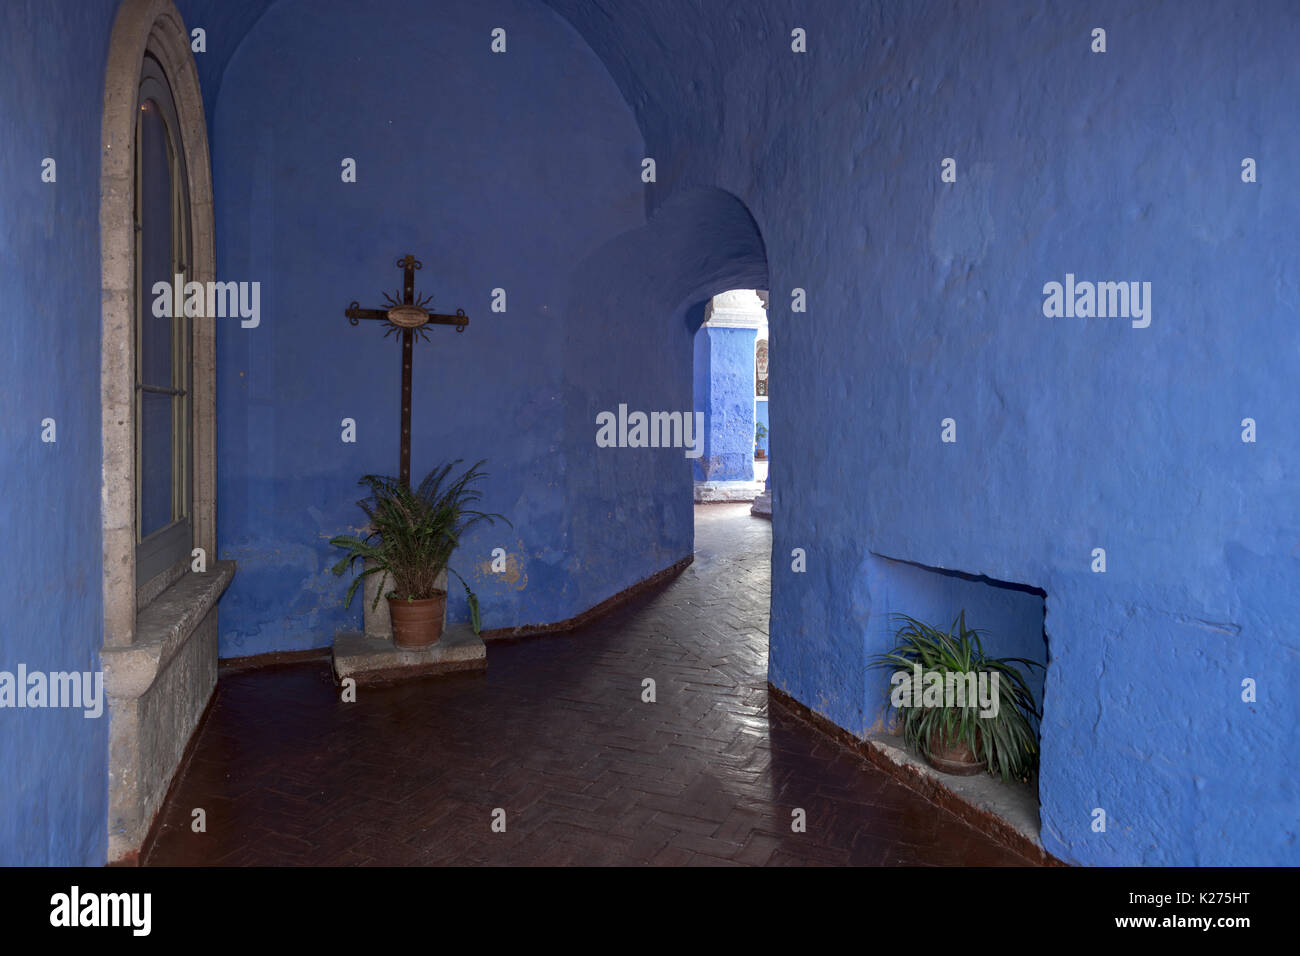 Convento de Santa Catalina (Convent of St. Catherine) 1579 cloisters Arequipa Peru Stock Photo